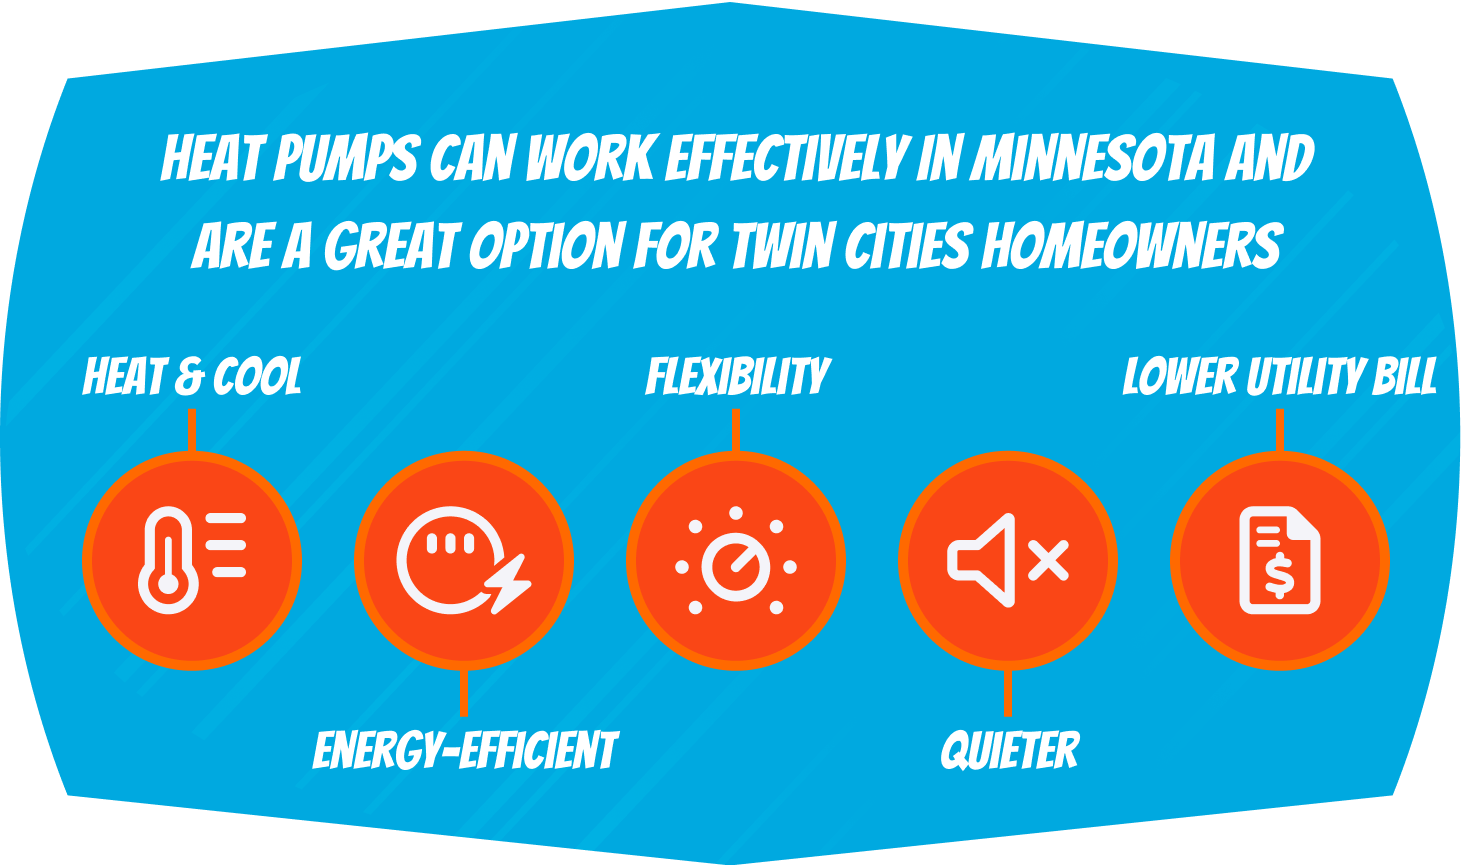 Do Heat Pumps Work in Minnesota?